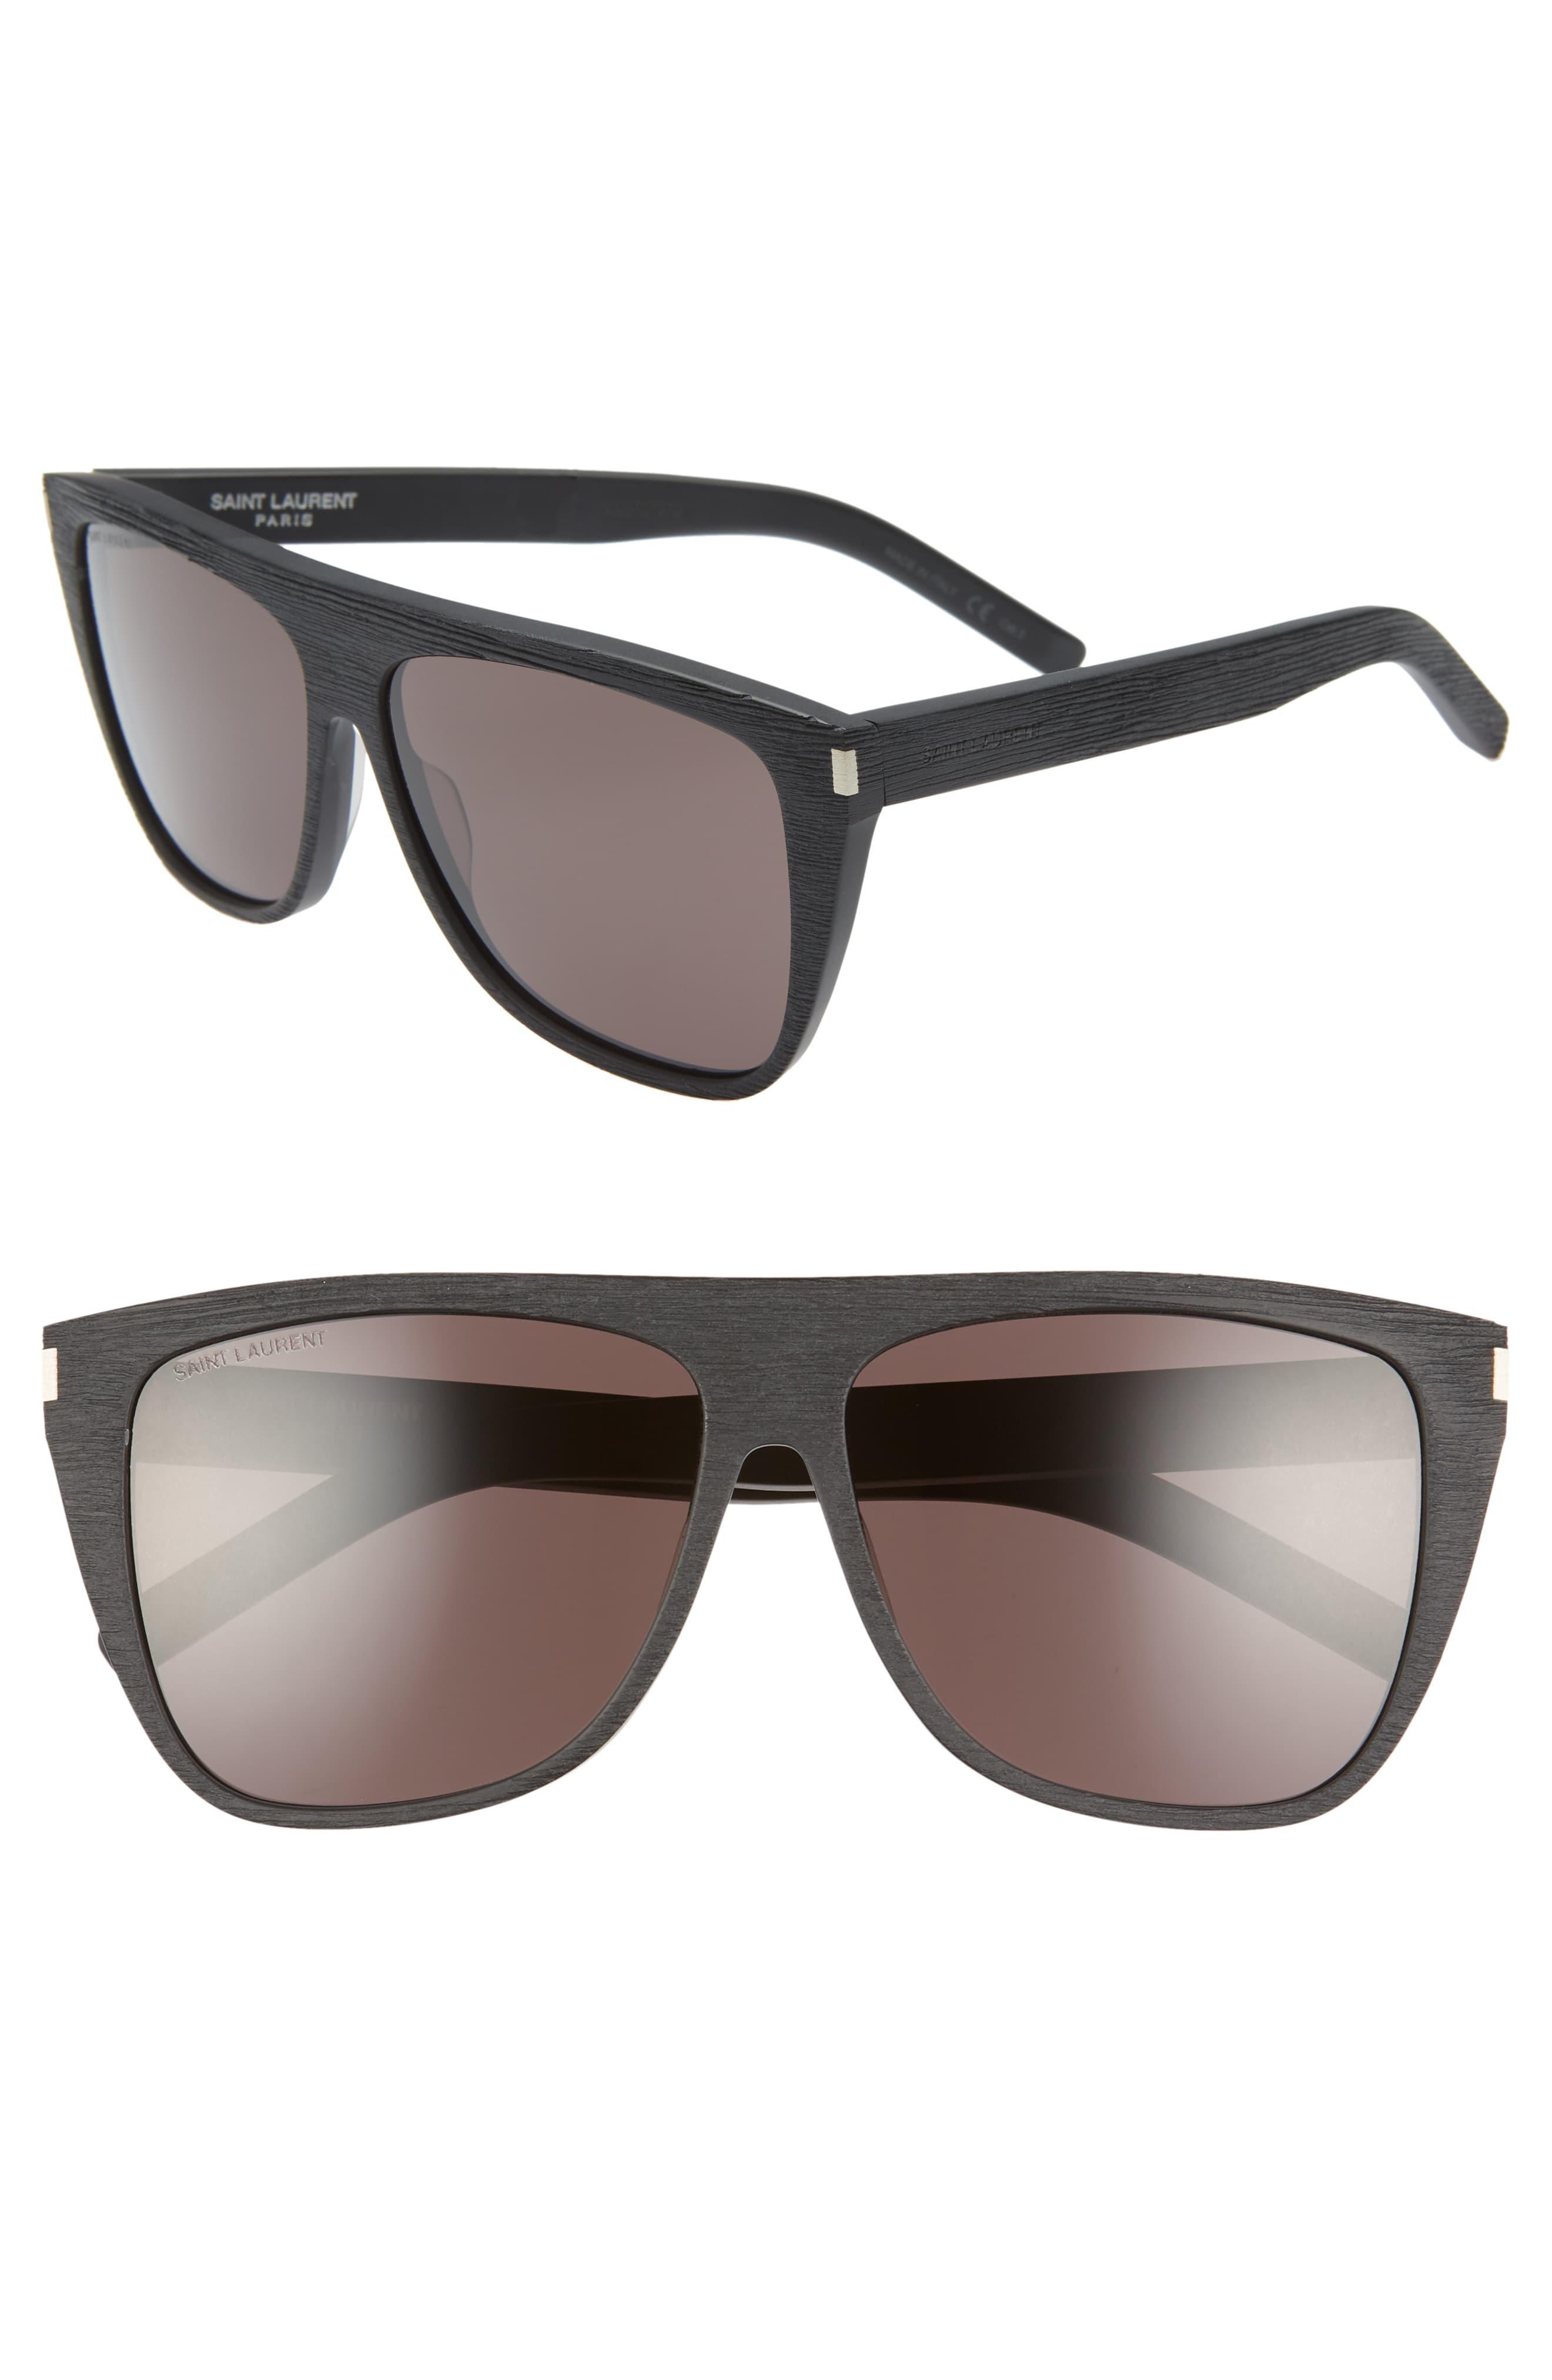 Saint Laurent 59mm Sunglasses in Black for Men - Lyst